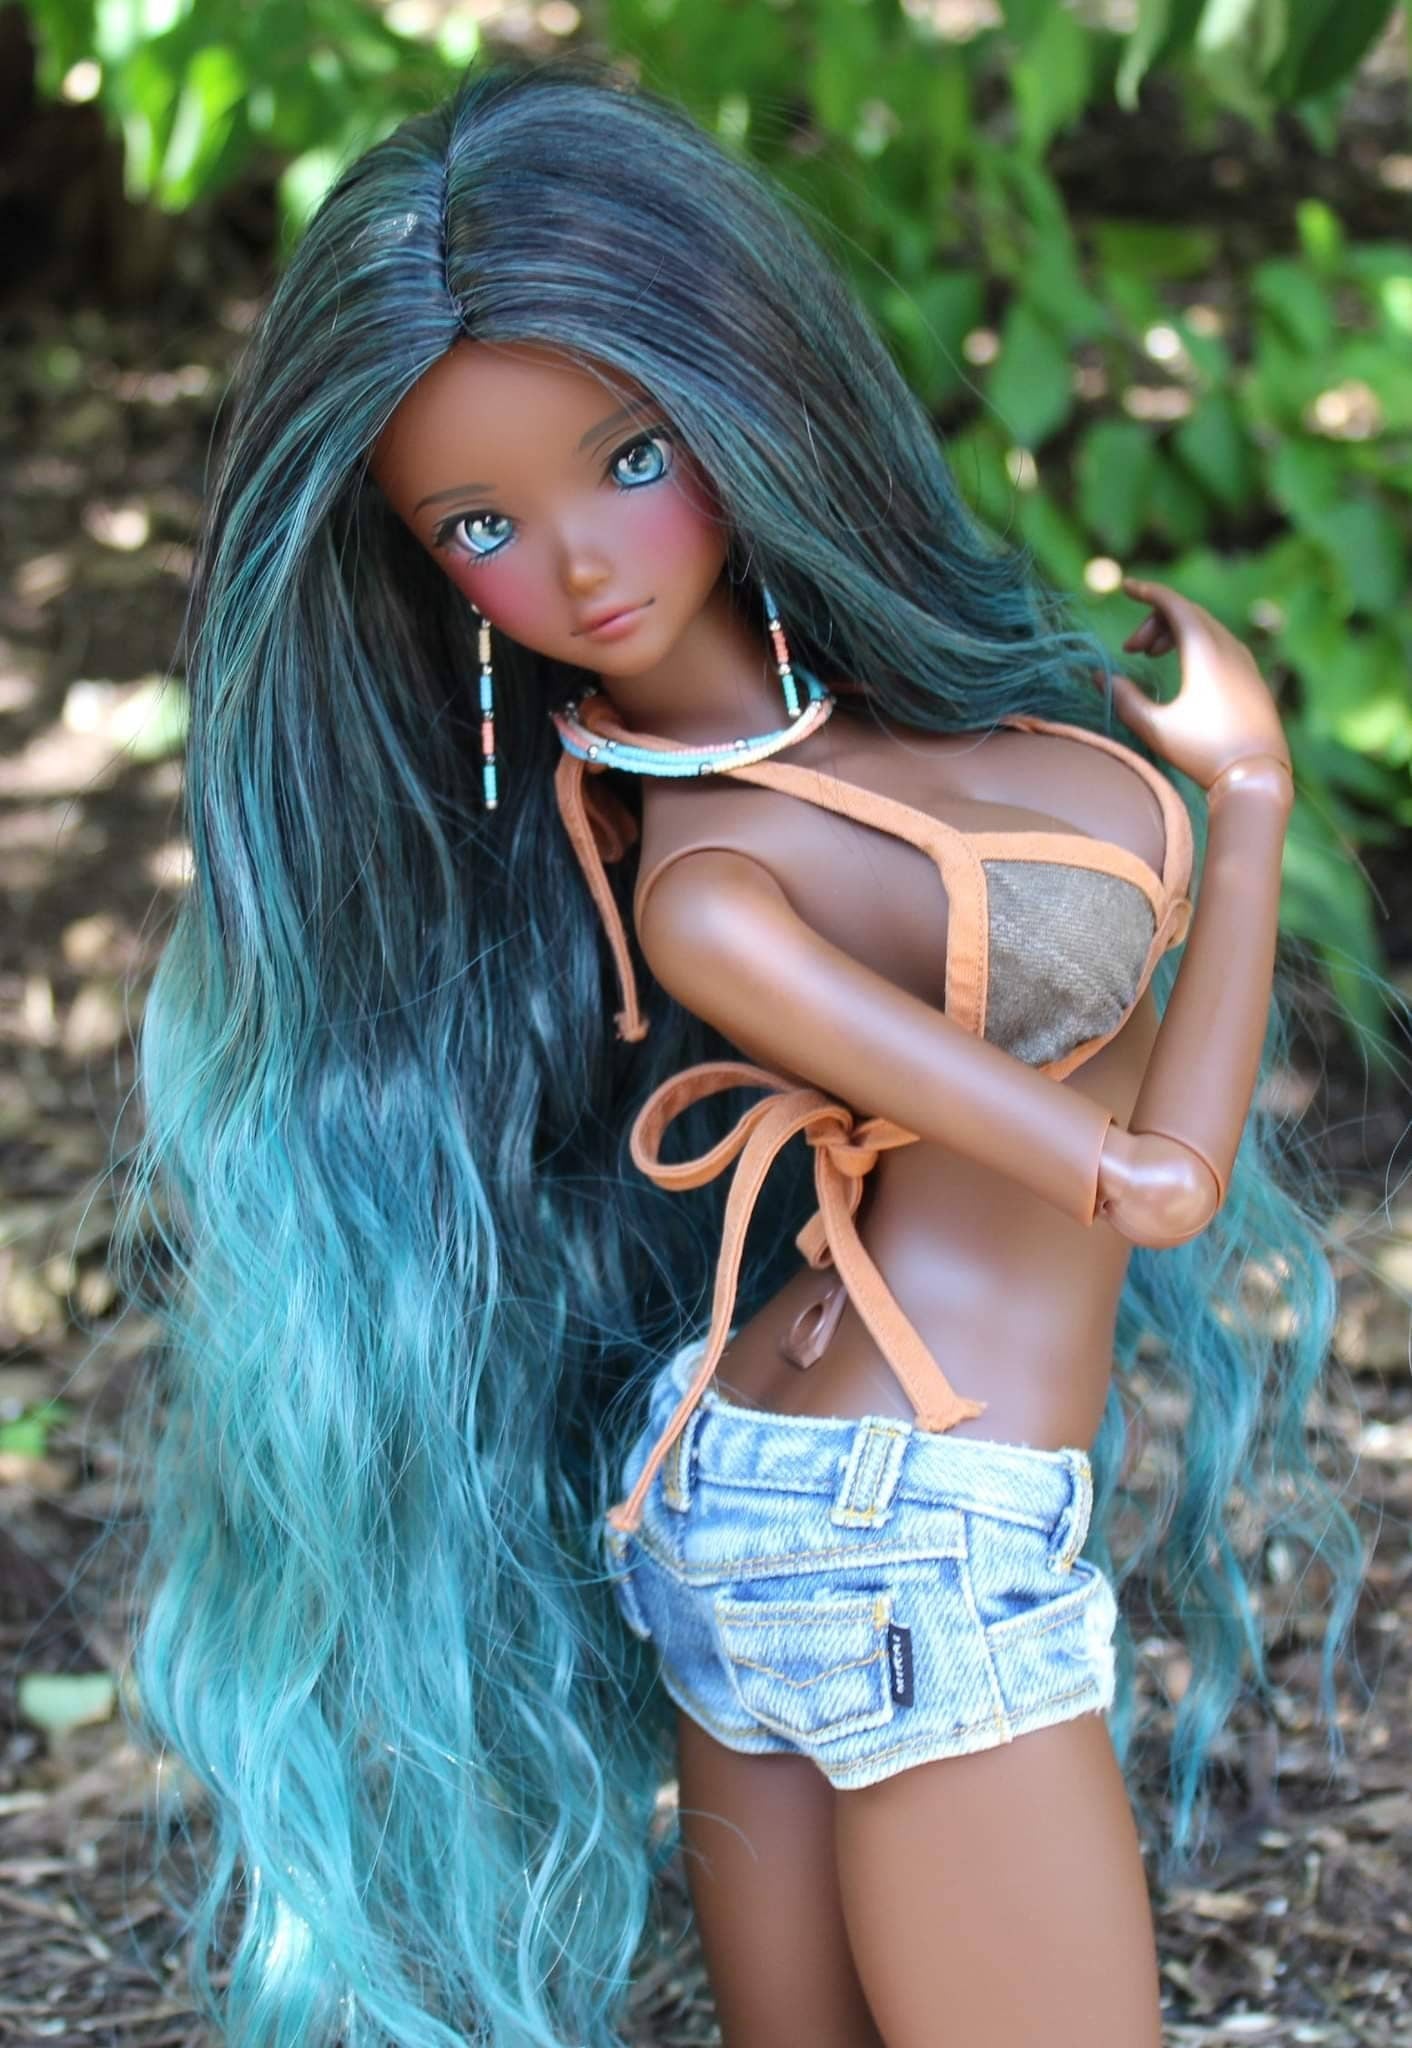 Custom doll Wig for Smart Dolls- Heat Safe - Tangle Resistant- 8.5" head size of Bjd, SD, Dollfie Dream dolls Teal Blues